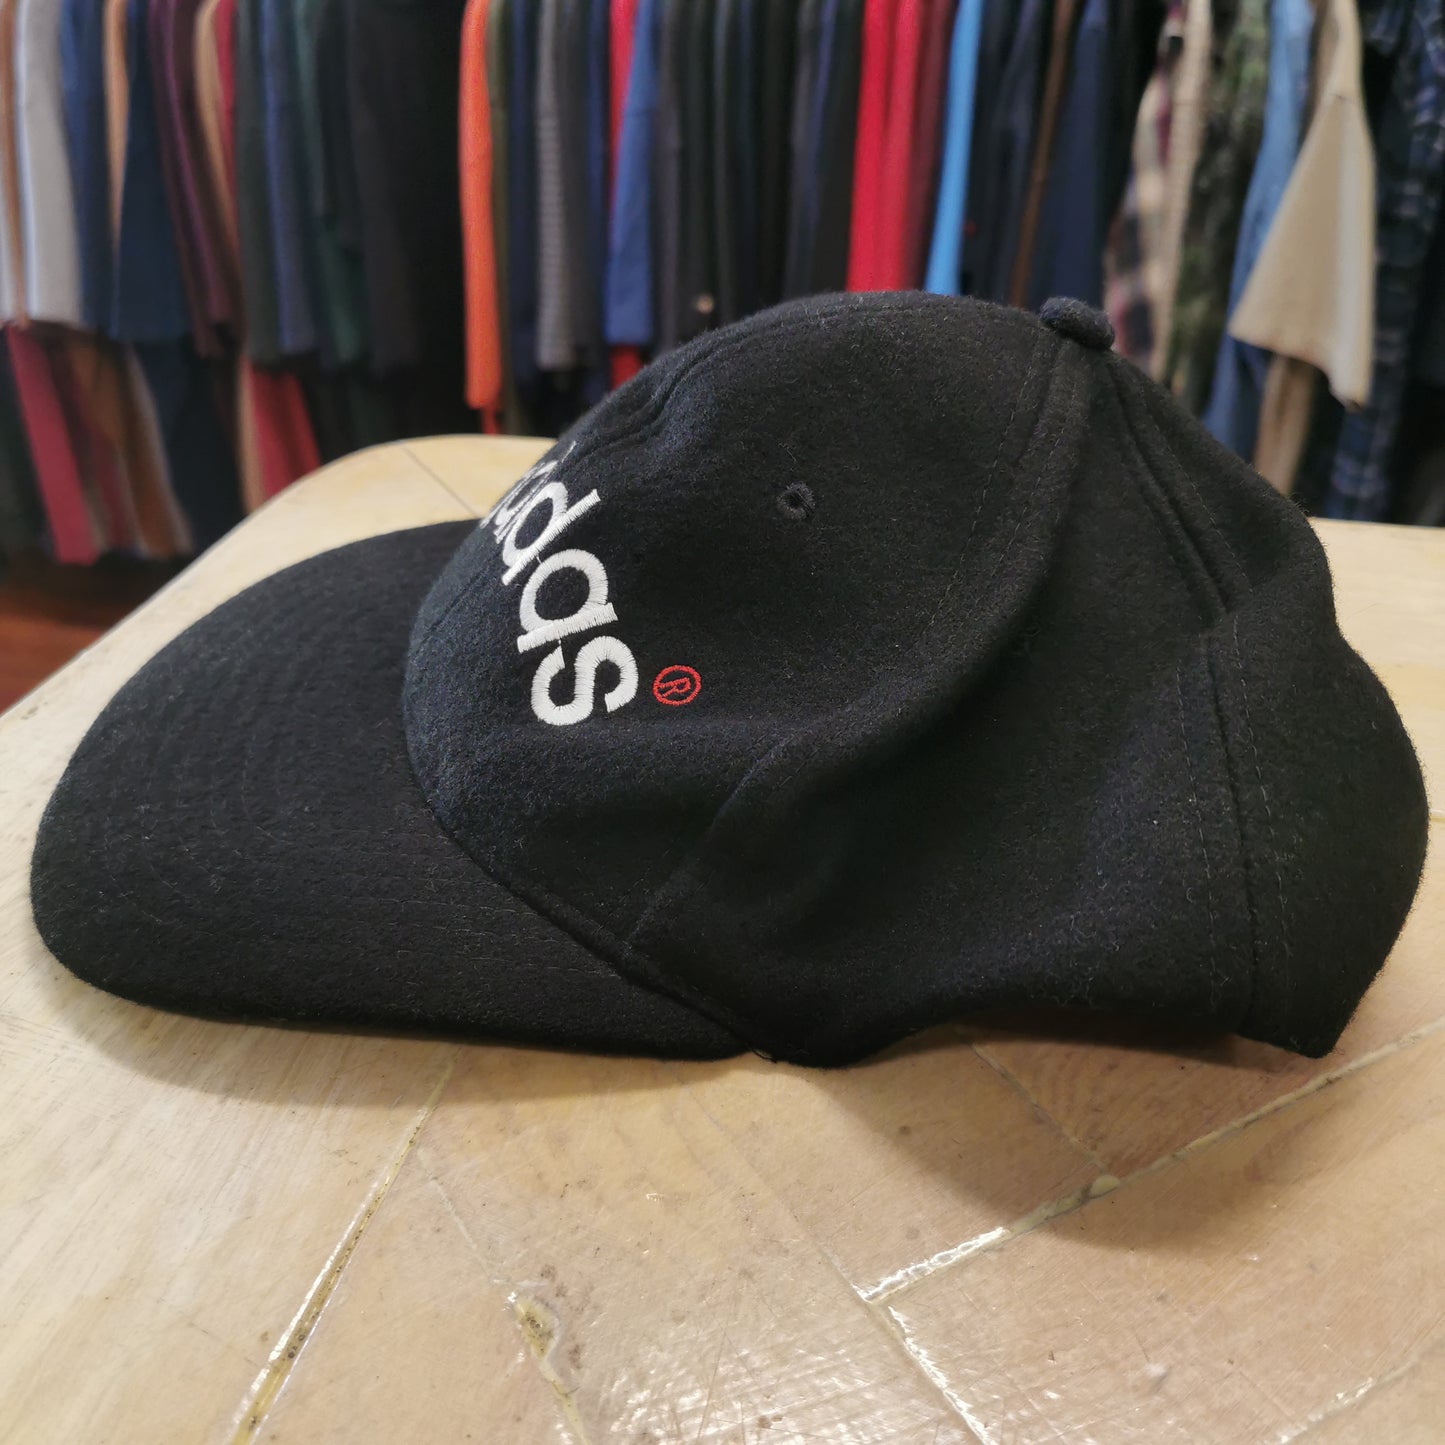 Adidas Black Wool Hat